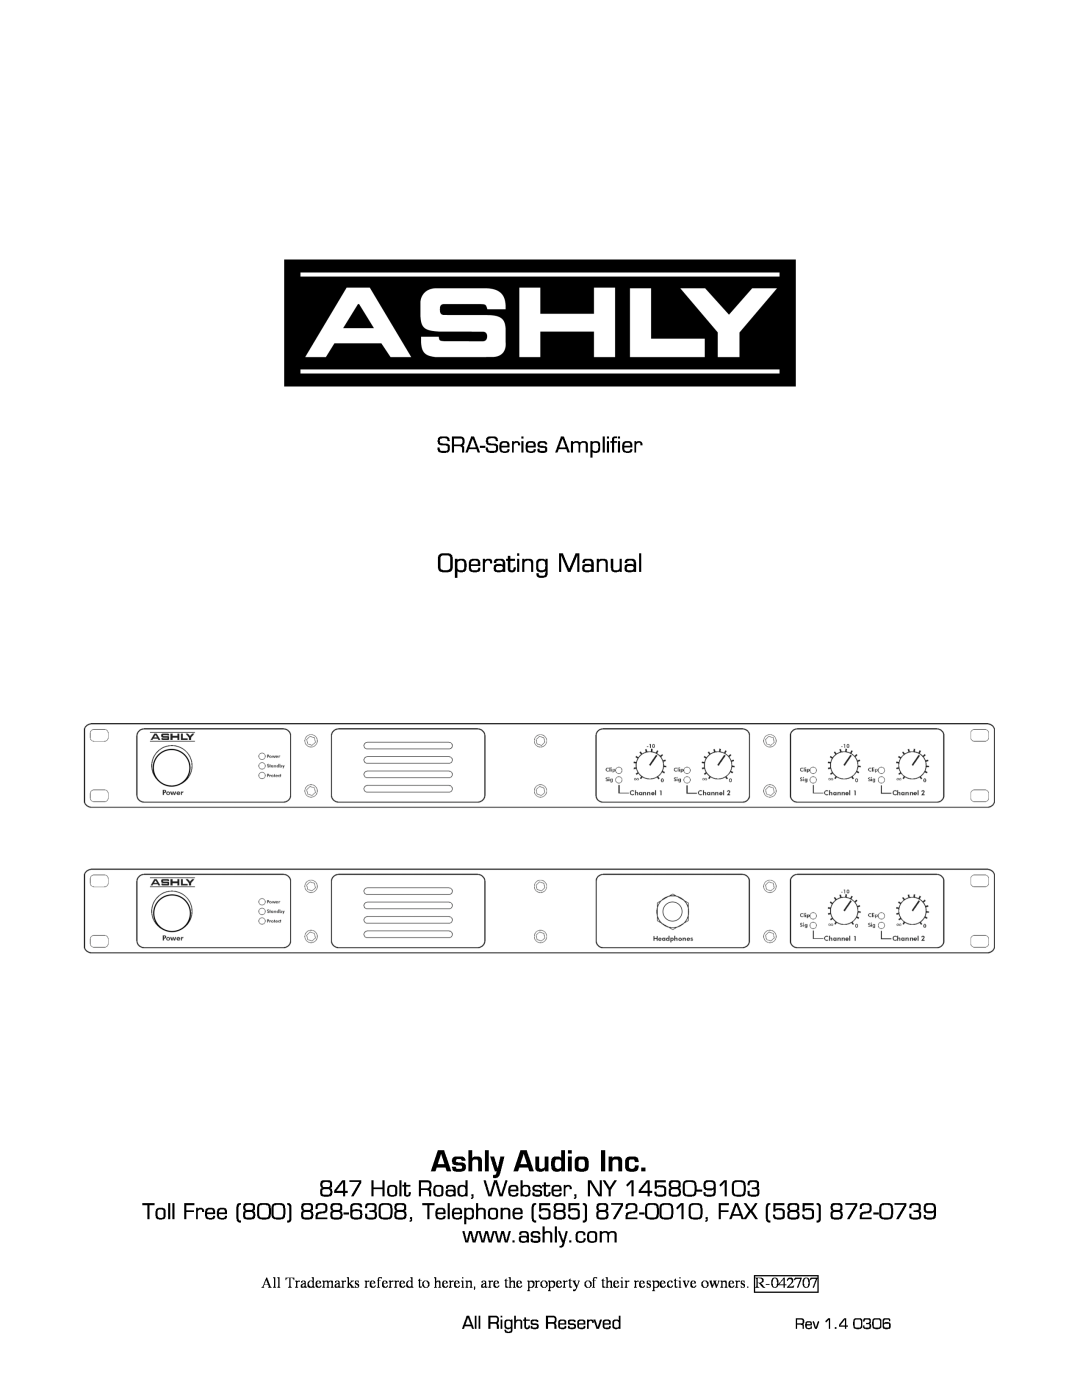 Ashly manual Operating Manual, SRA-SeriesAmplifier, Holt Road, Webster, NY, Ashly Audio Inc 